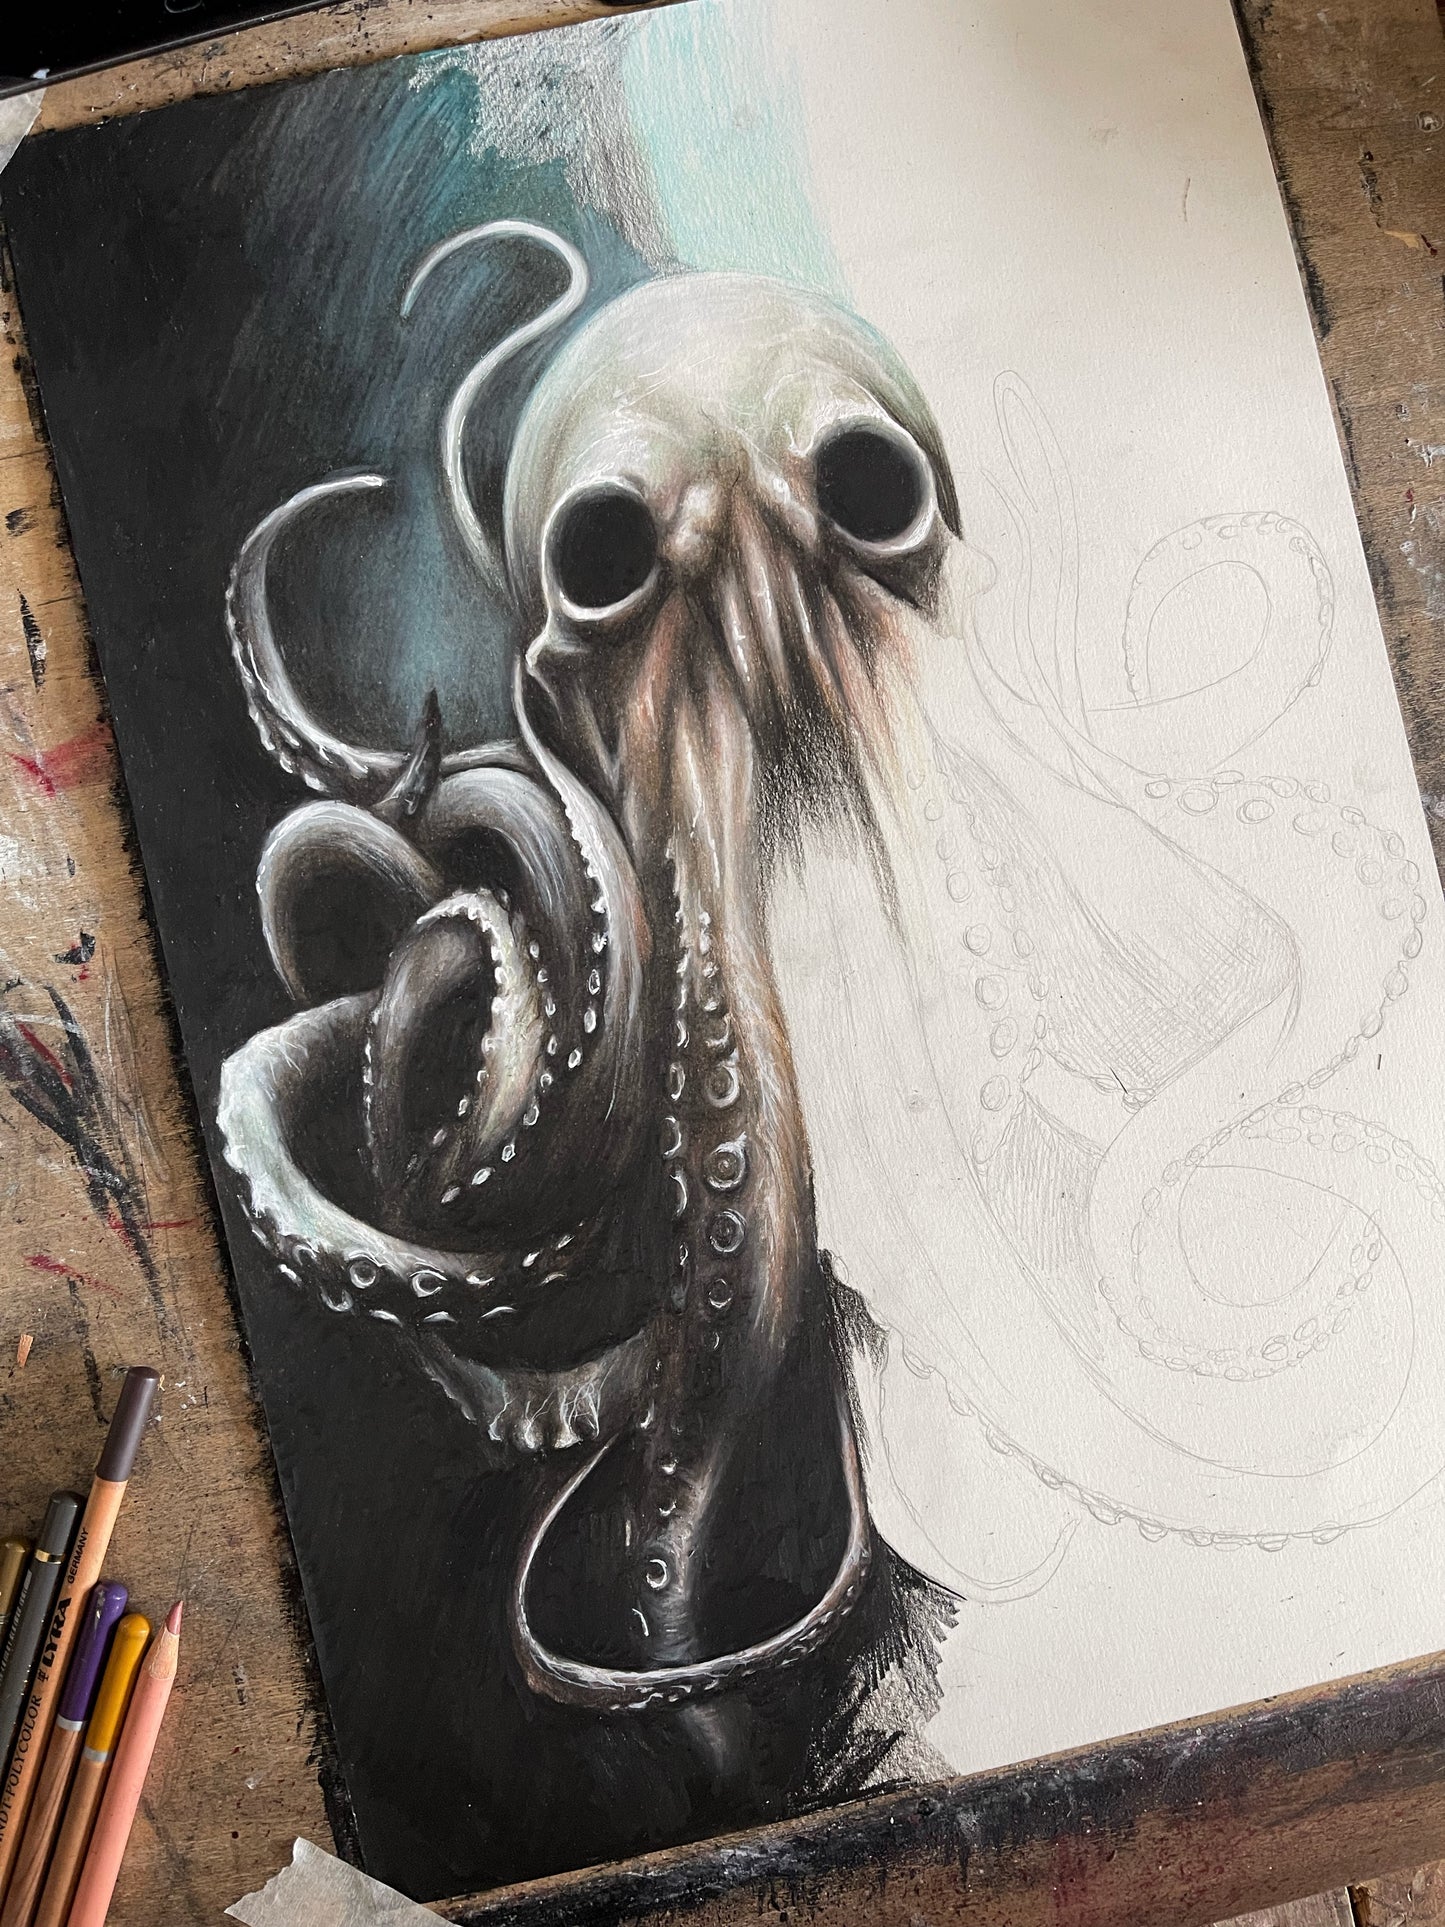 CEPHALOPOD (Octopus) | Unisex Hoodie